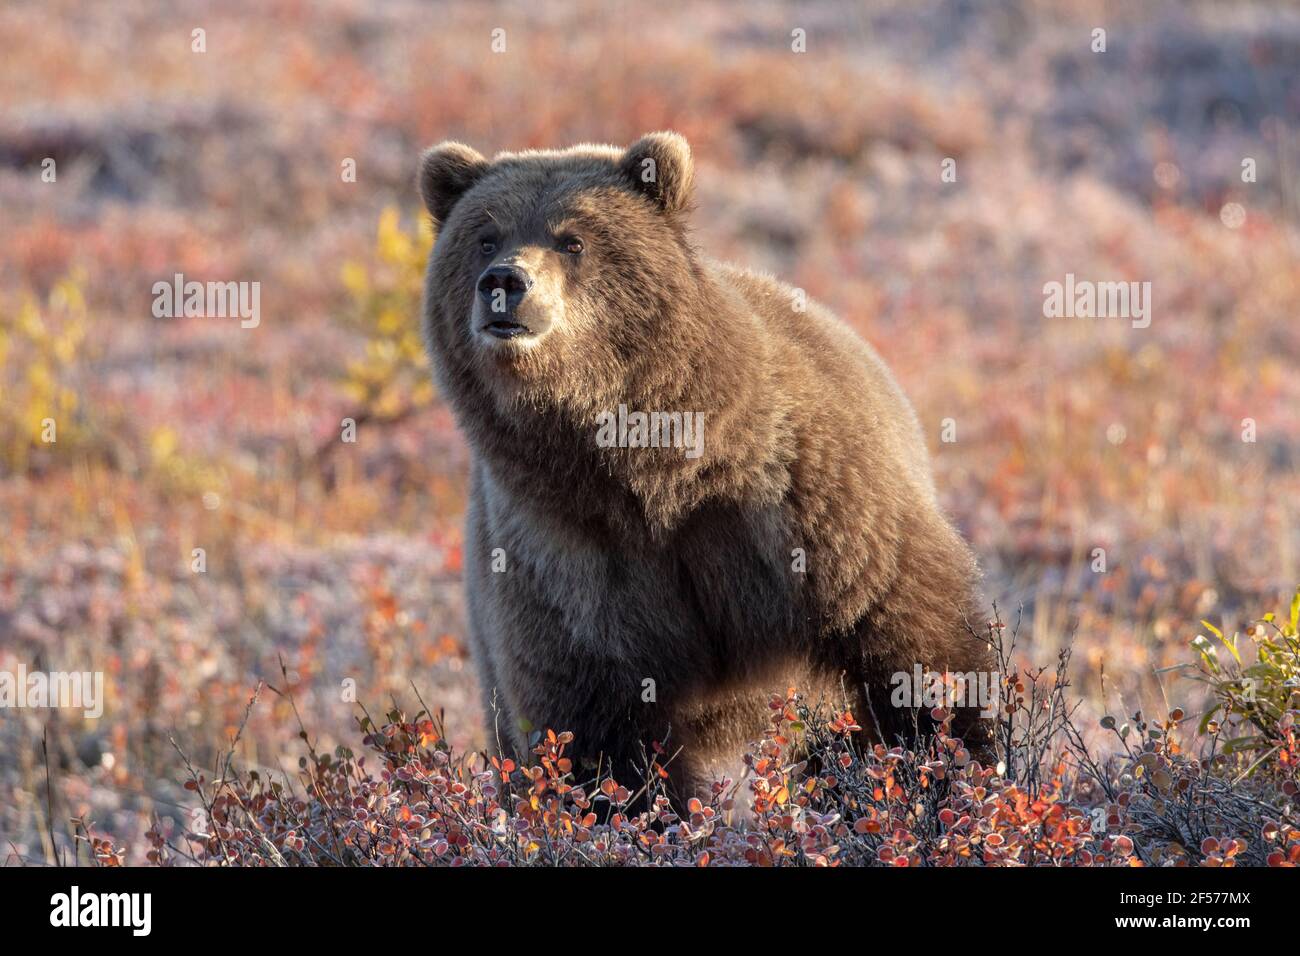 Grizzly bear in habitat Stock Photo